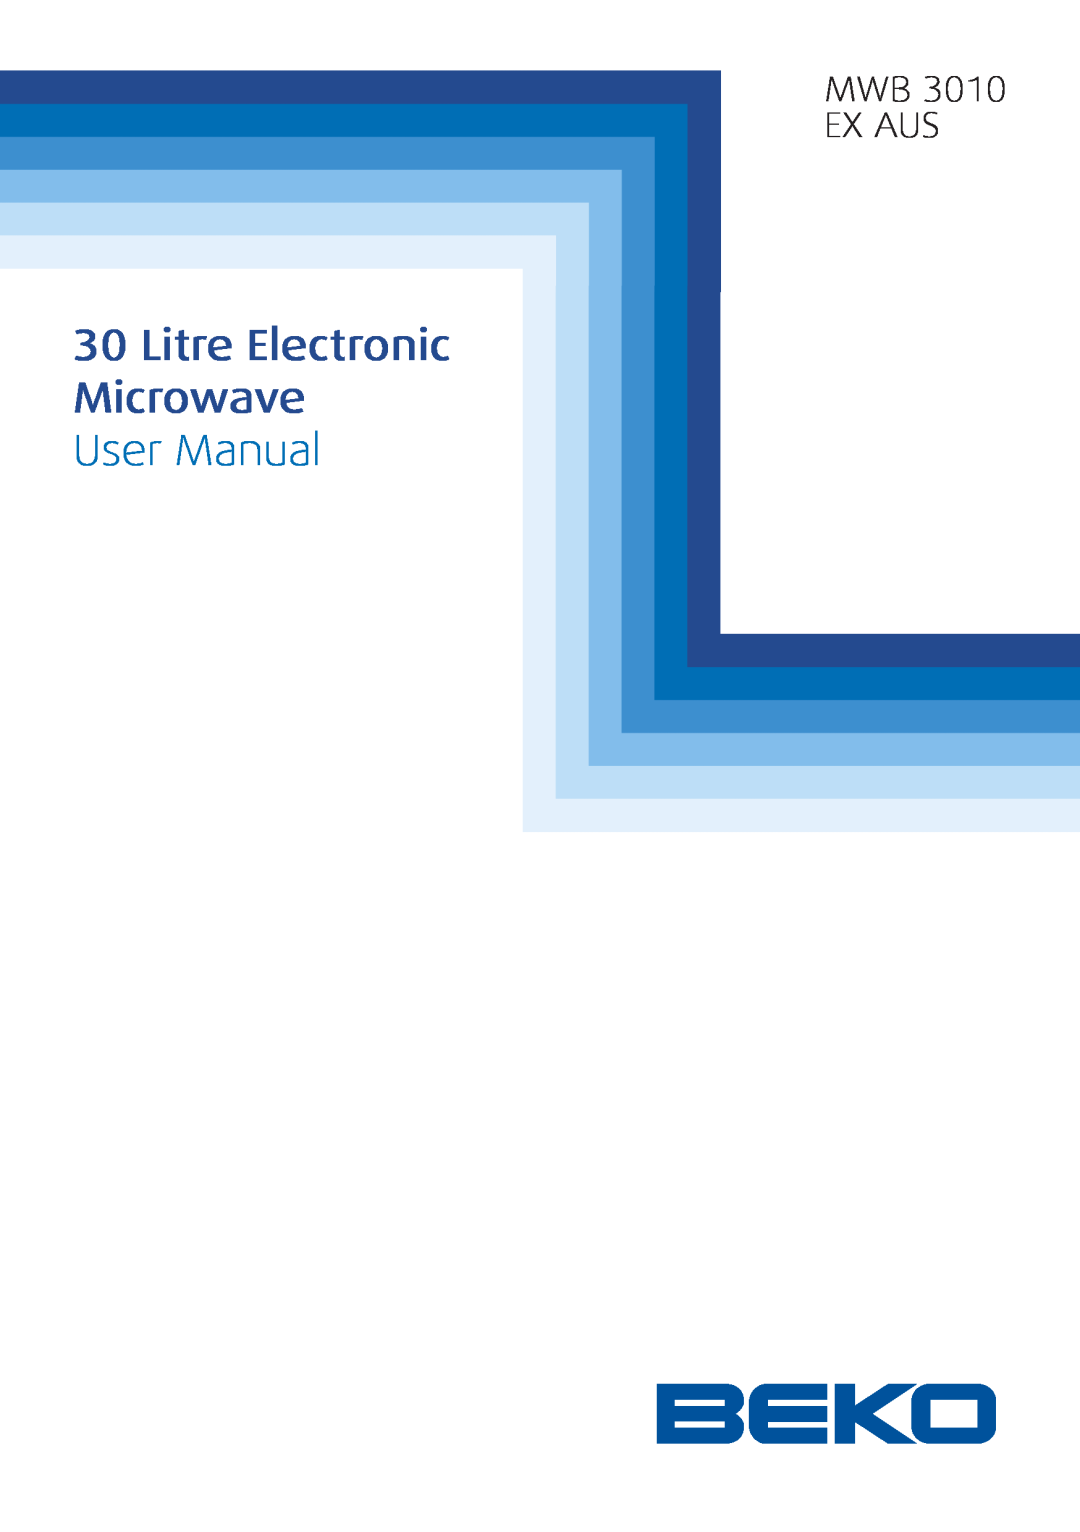 Beko MWB 3010 user manual Litre Electronic Microwave, Mwb Ex Aus 